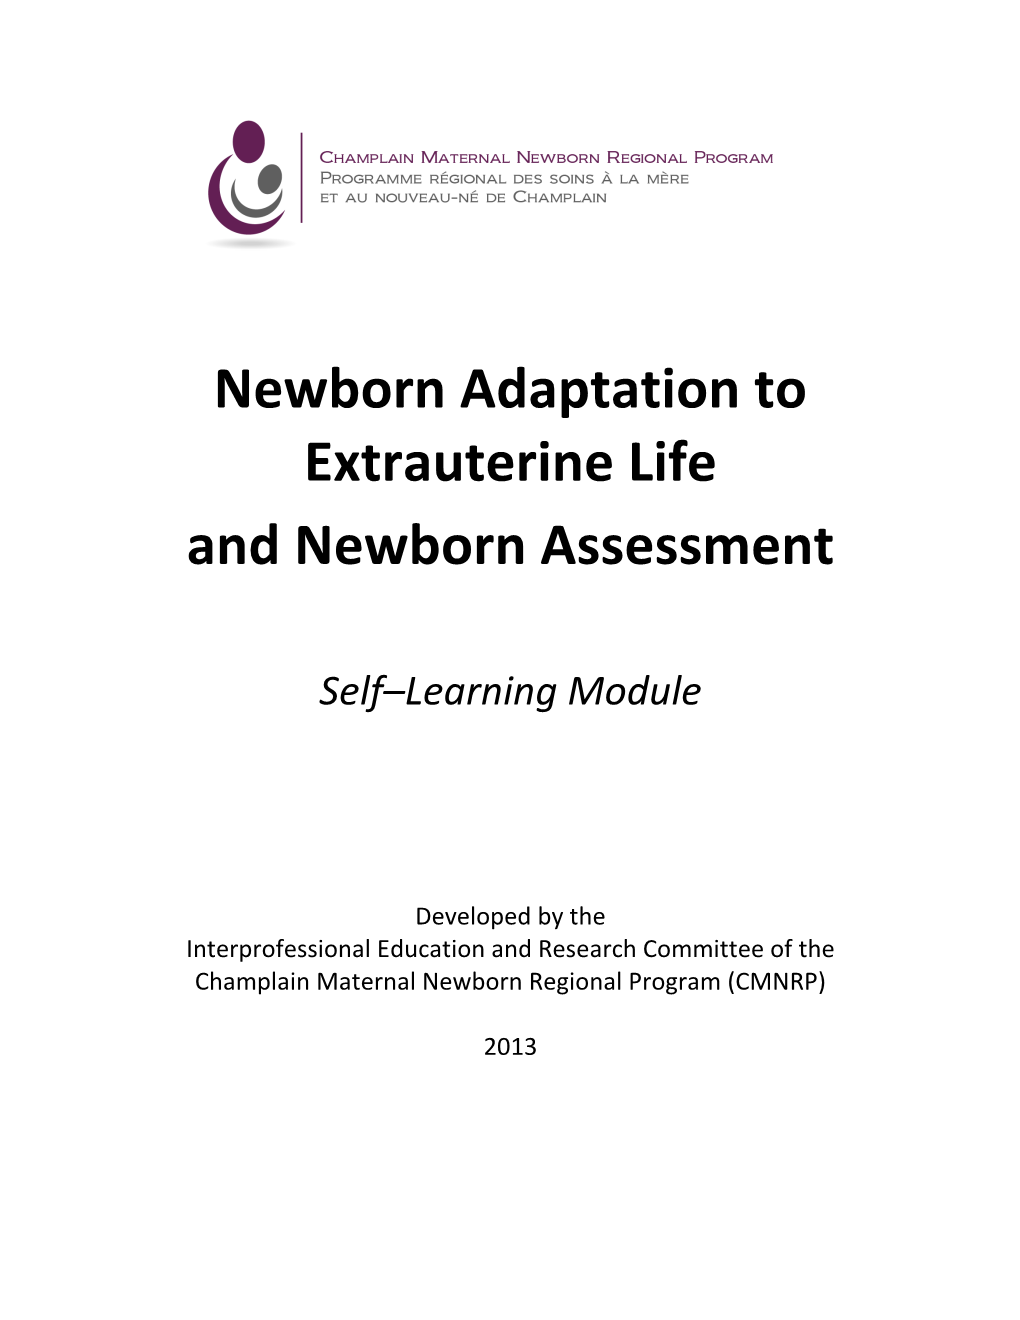 Newborn Adaptation to Extrauterine Life and Newborn Assessment